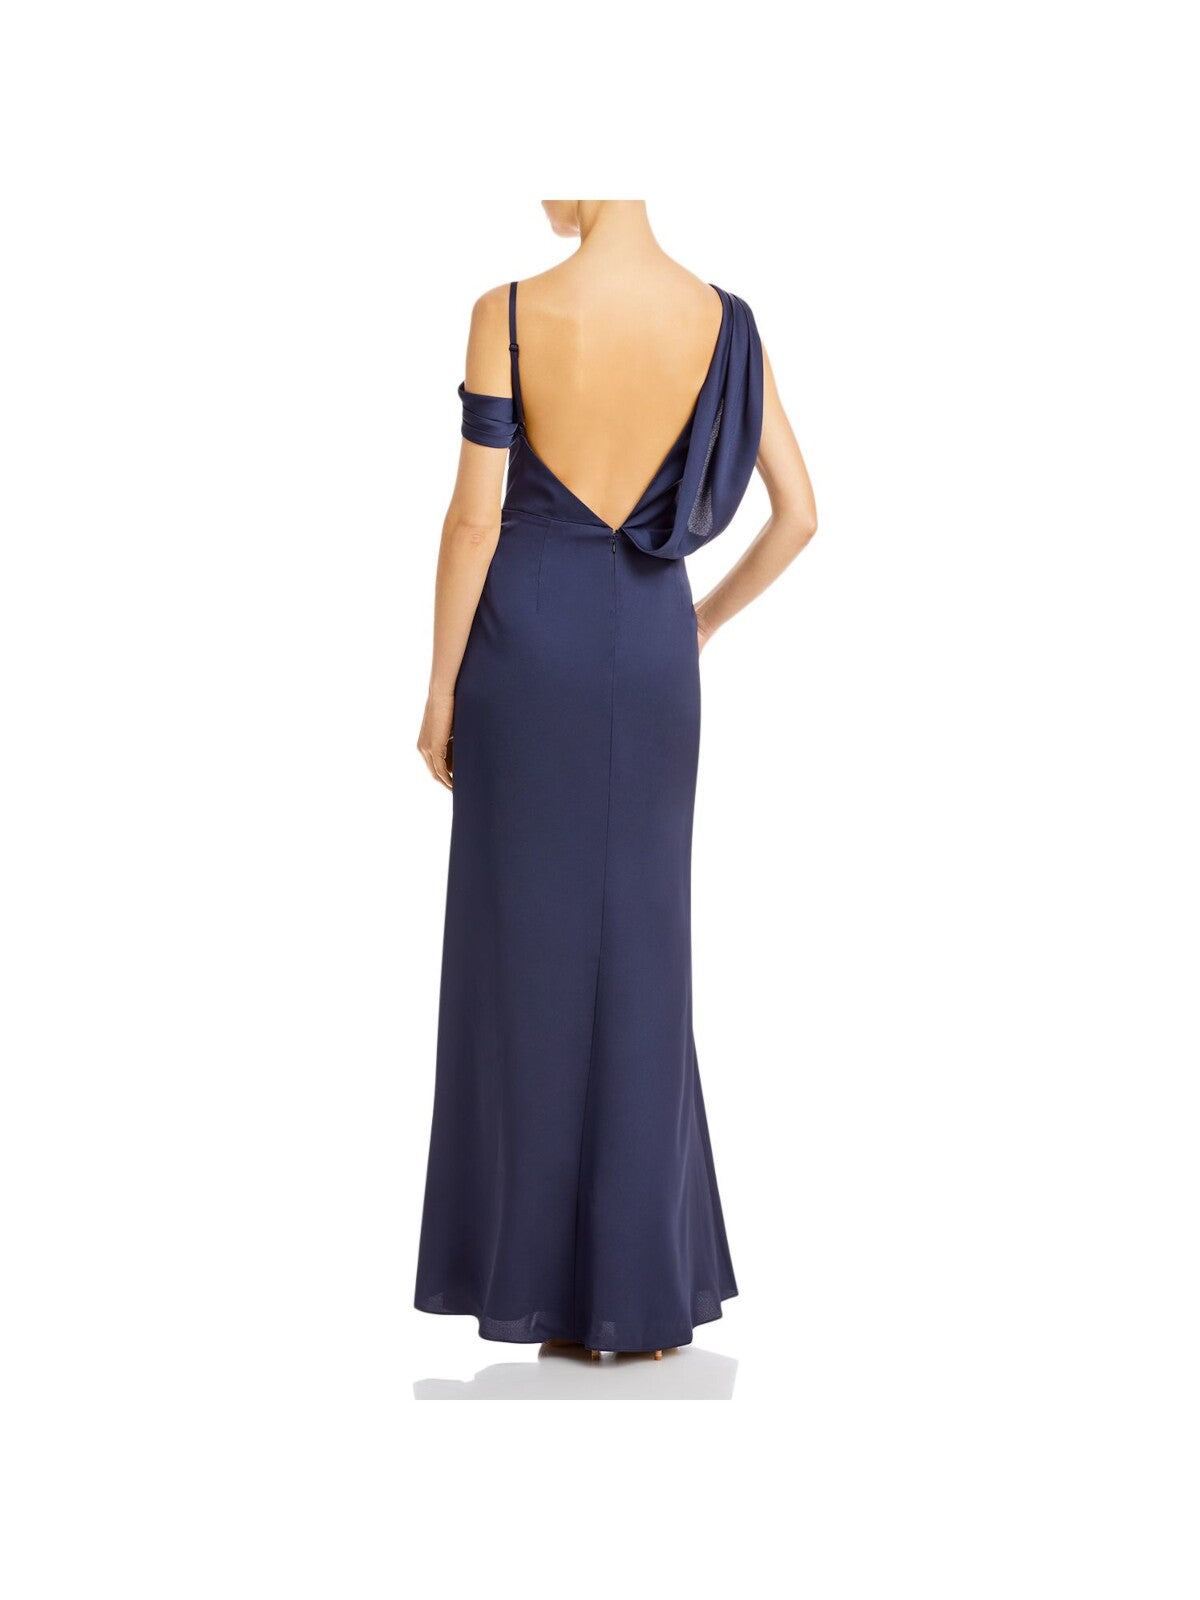 AQUA FORMAL Womens Navy Zippered Adjustable Lined Sleeveless Asymmetrical Neckline Full-Length Evening Gown Dress 10